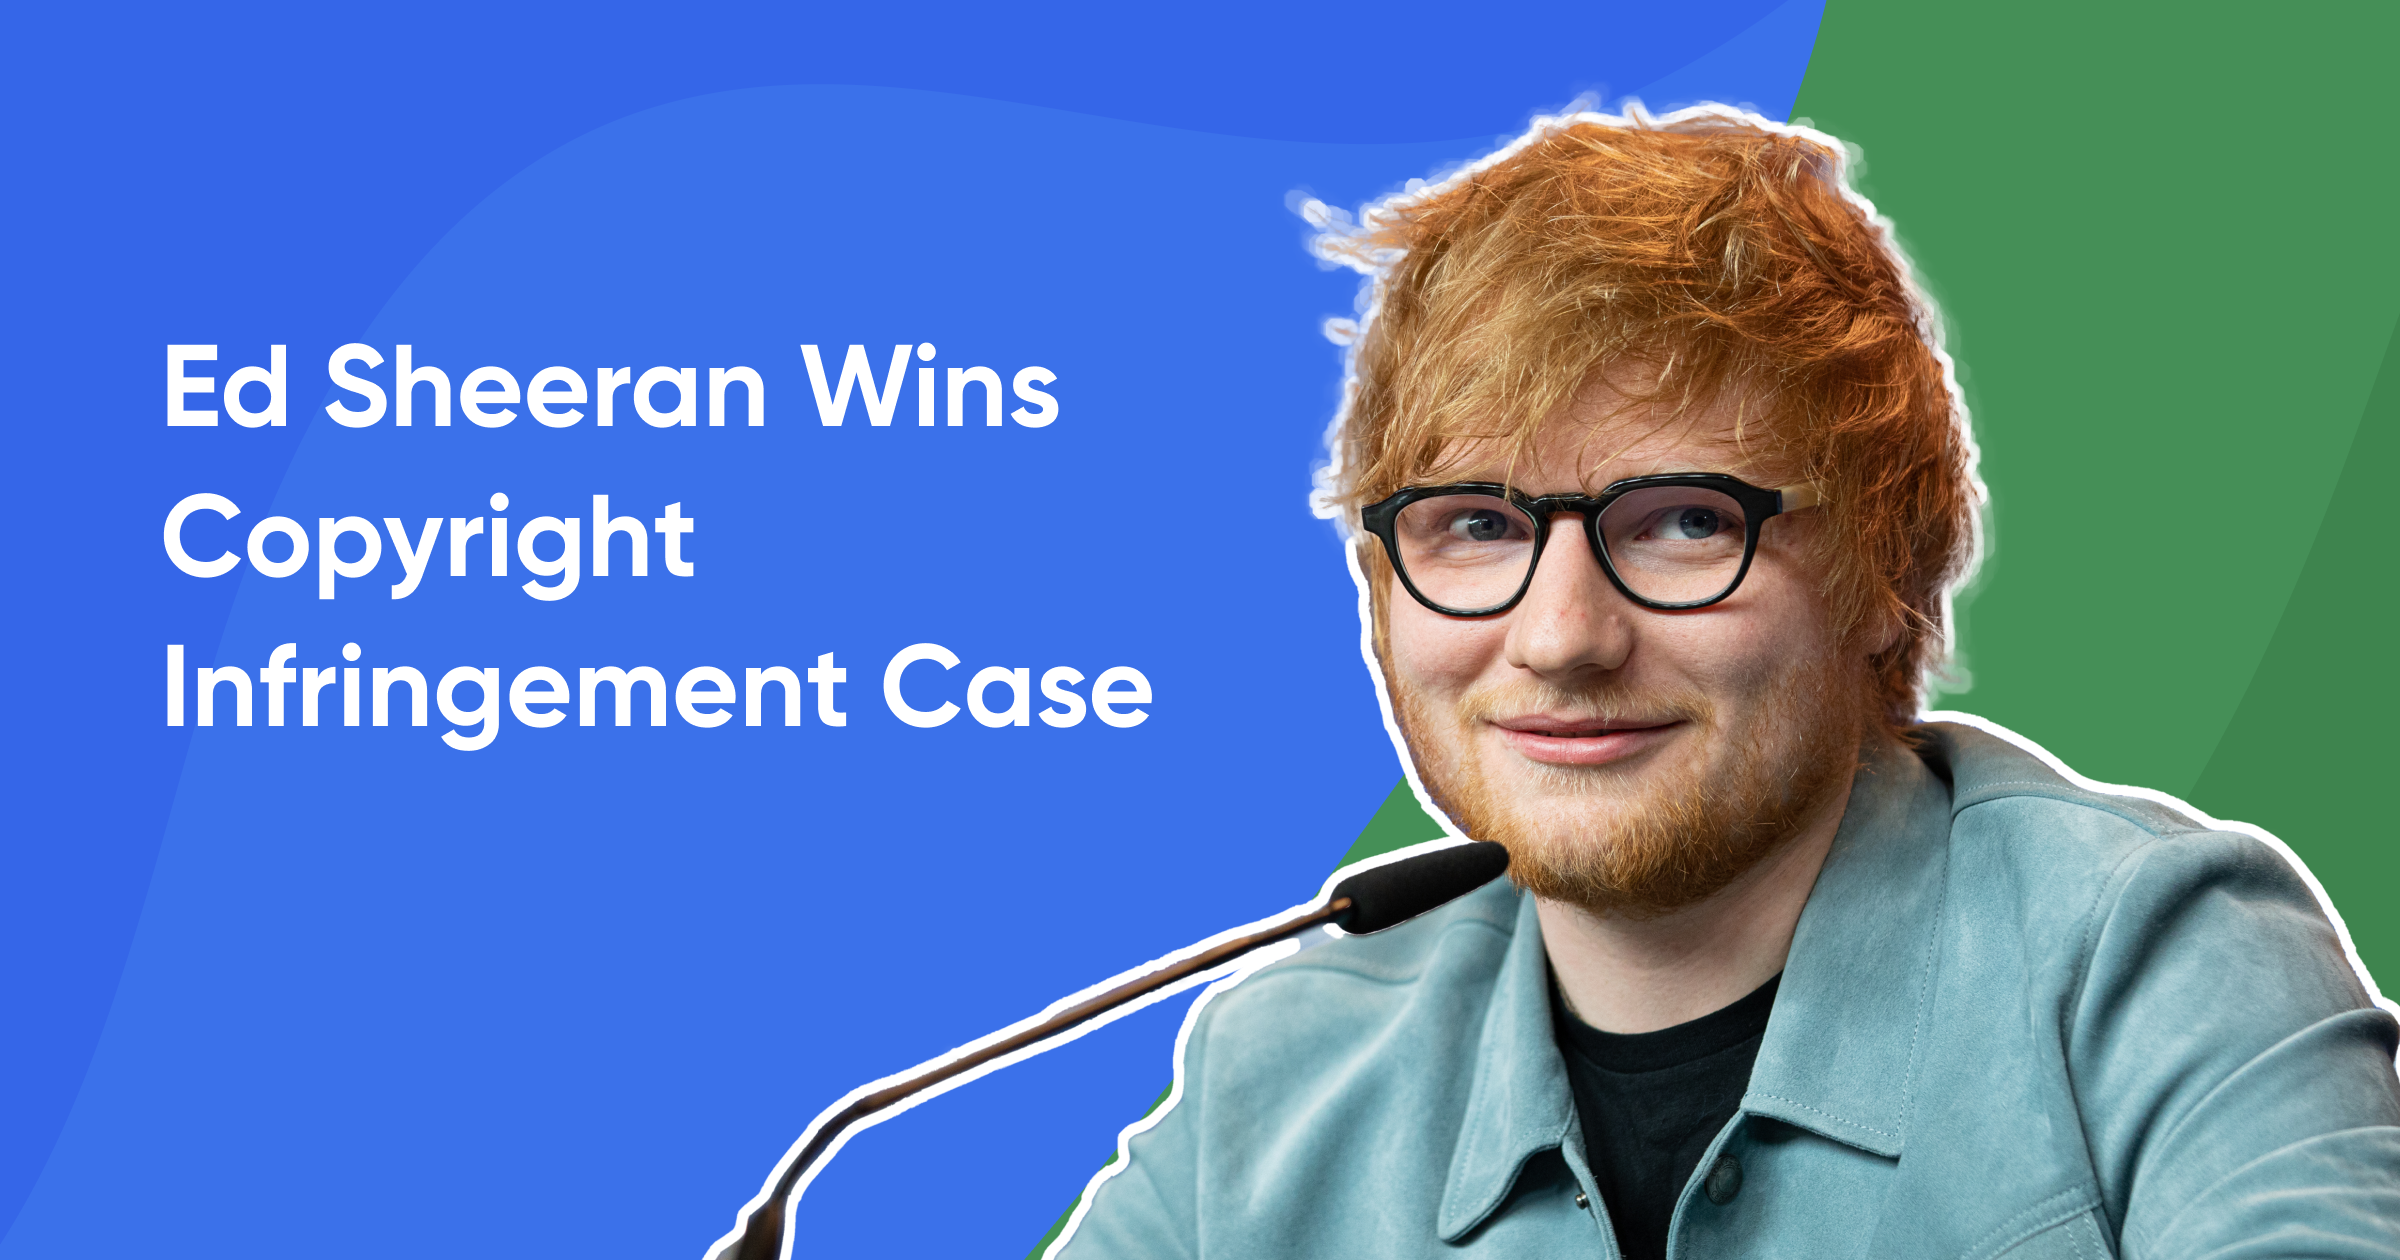 Ed Sheeran Wins Copyright Infringement Case